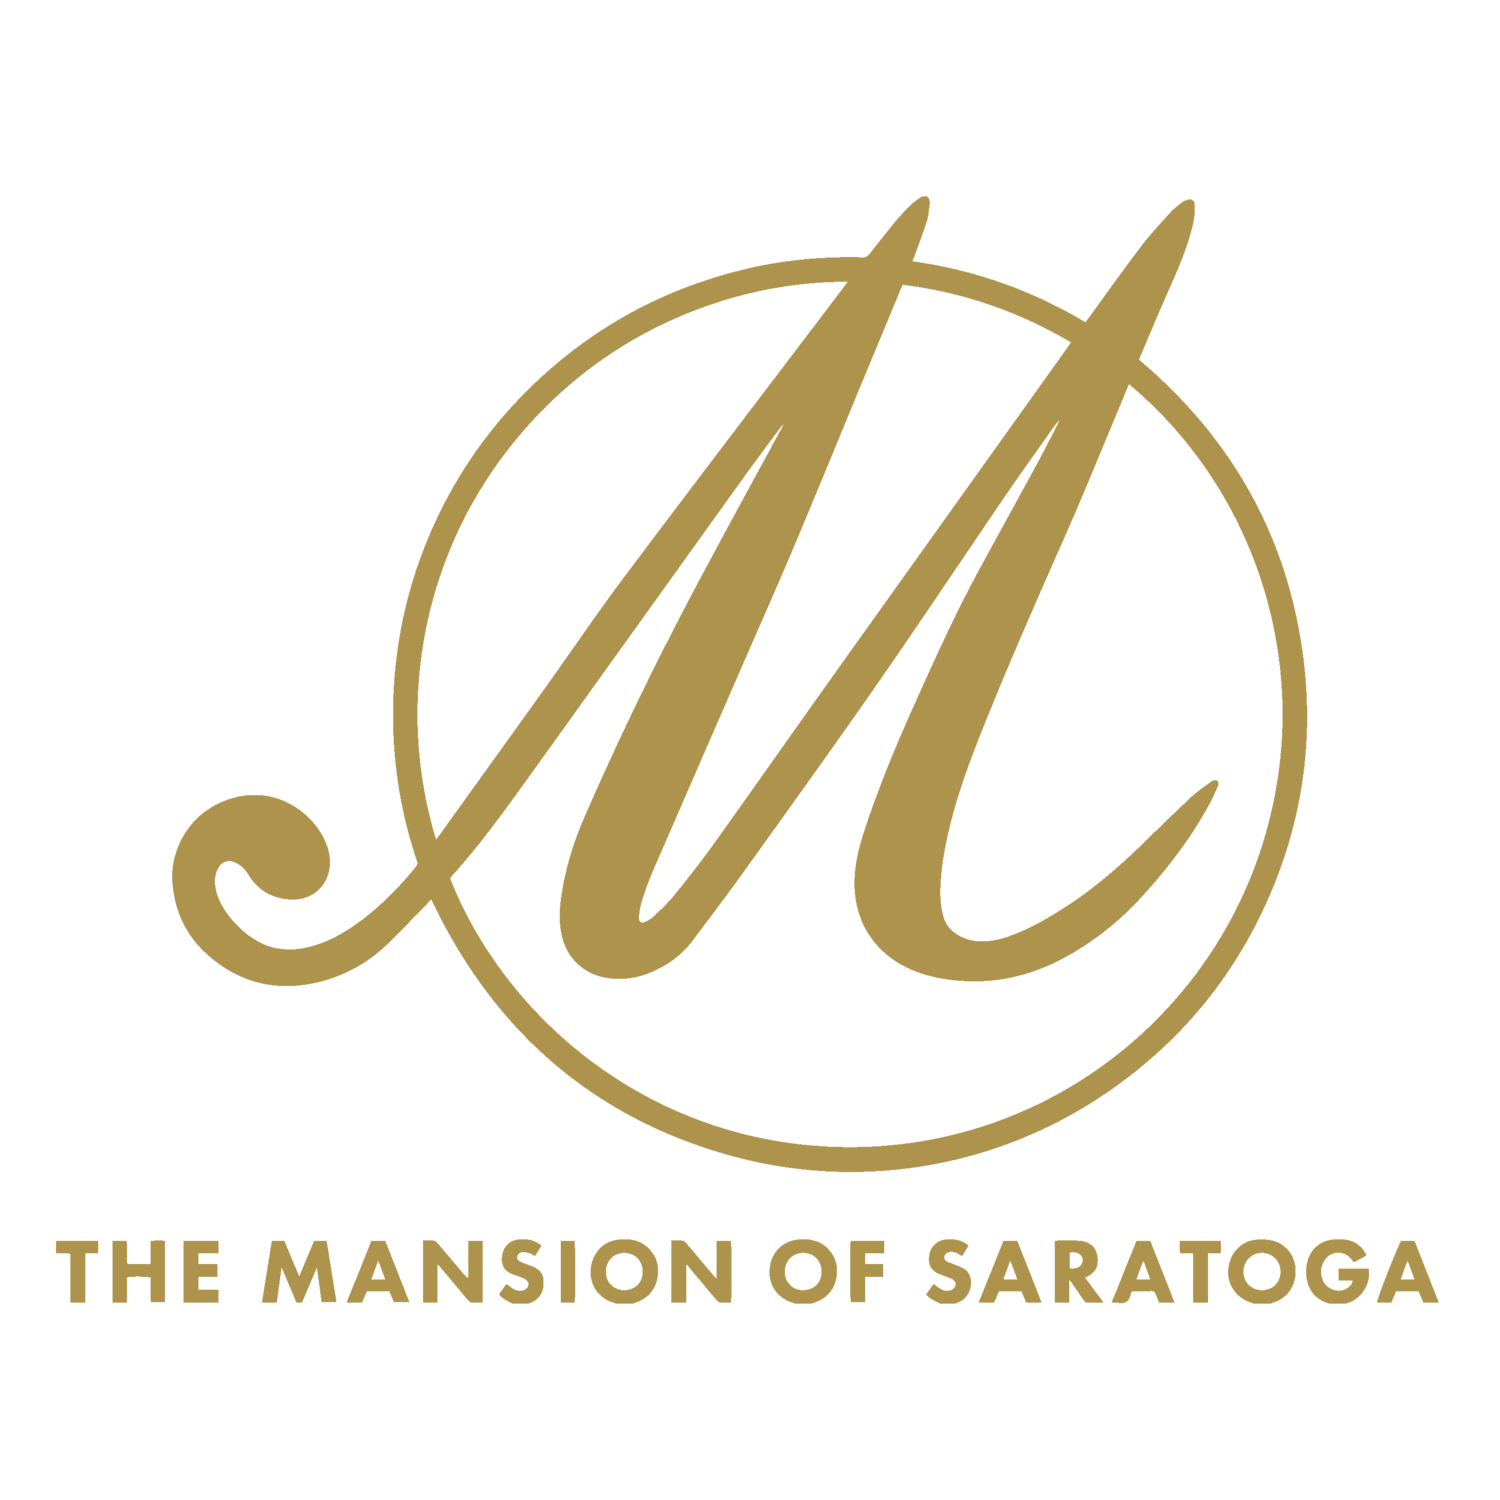 The Mansion of Saratoga